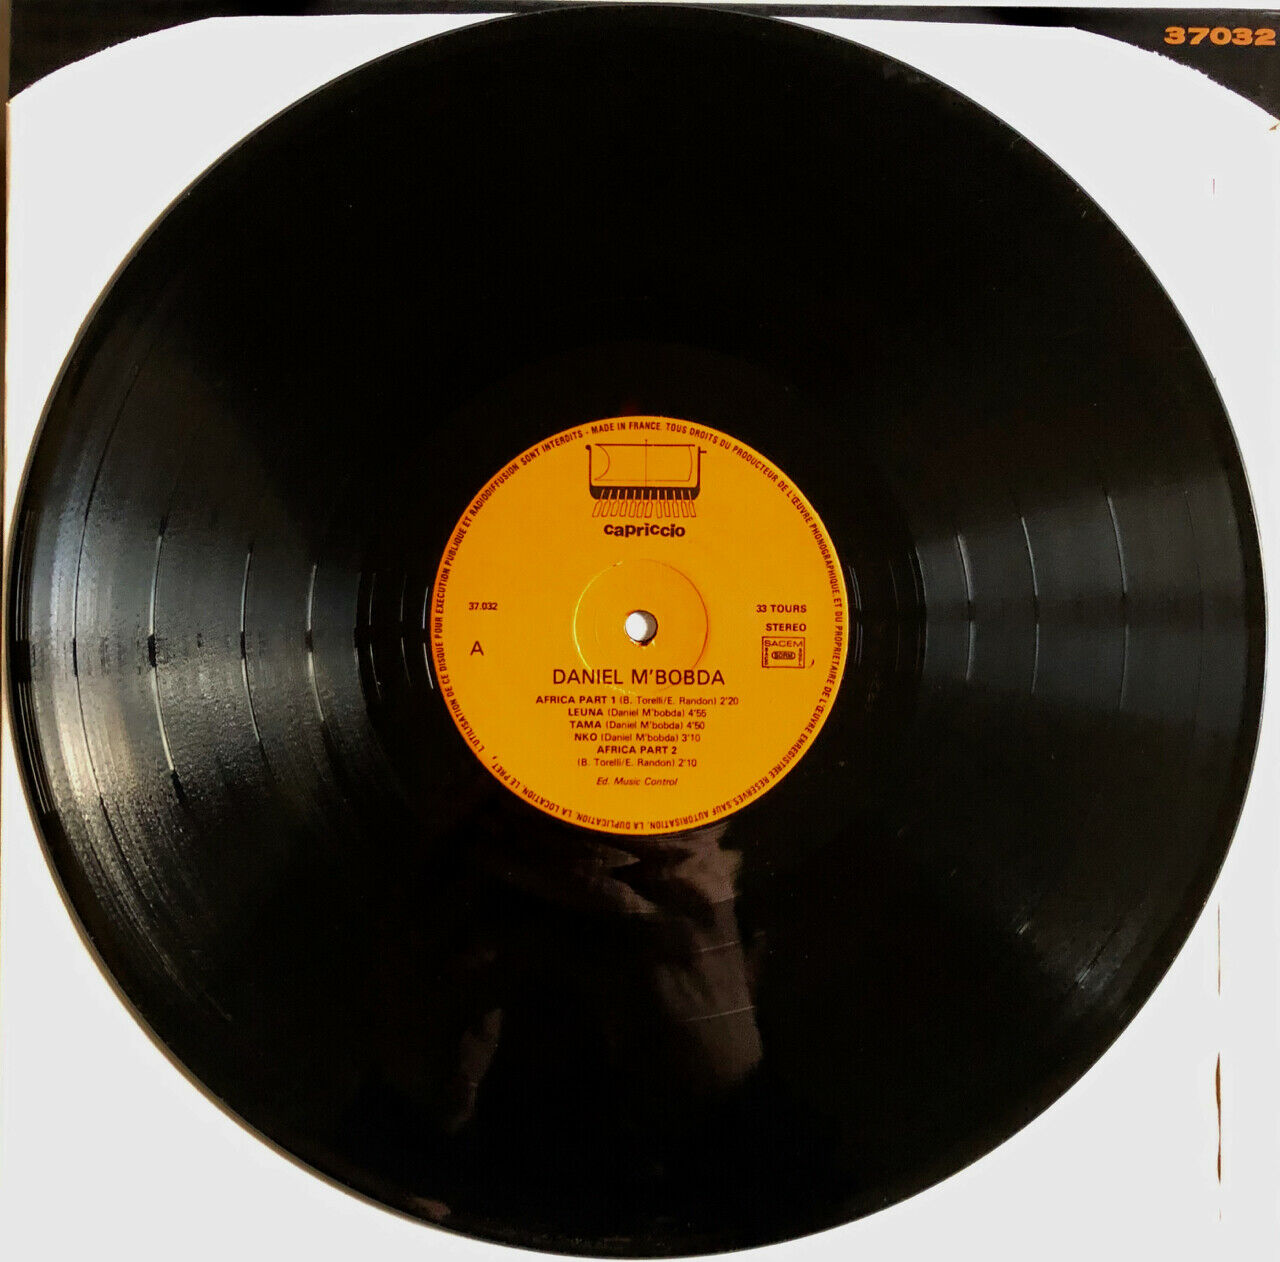 Daniel M'bobda — LP 33 RPM  — Capriccio — 37032 — France — Boogie Funk — 1970's.